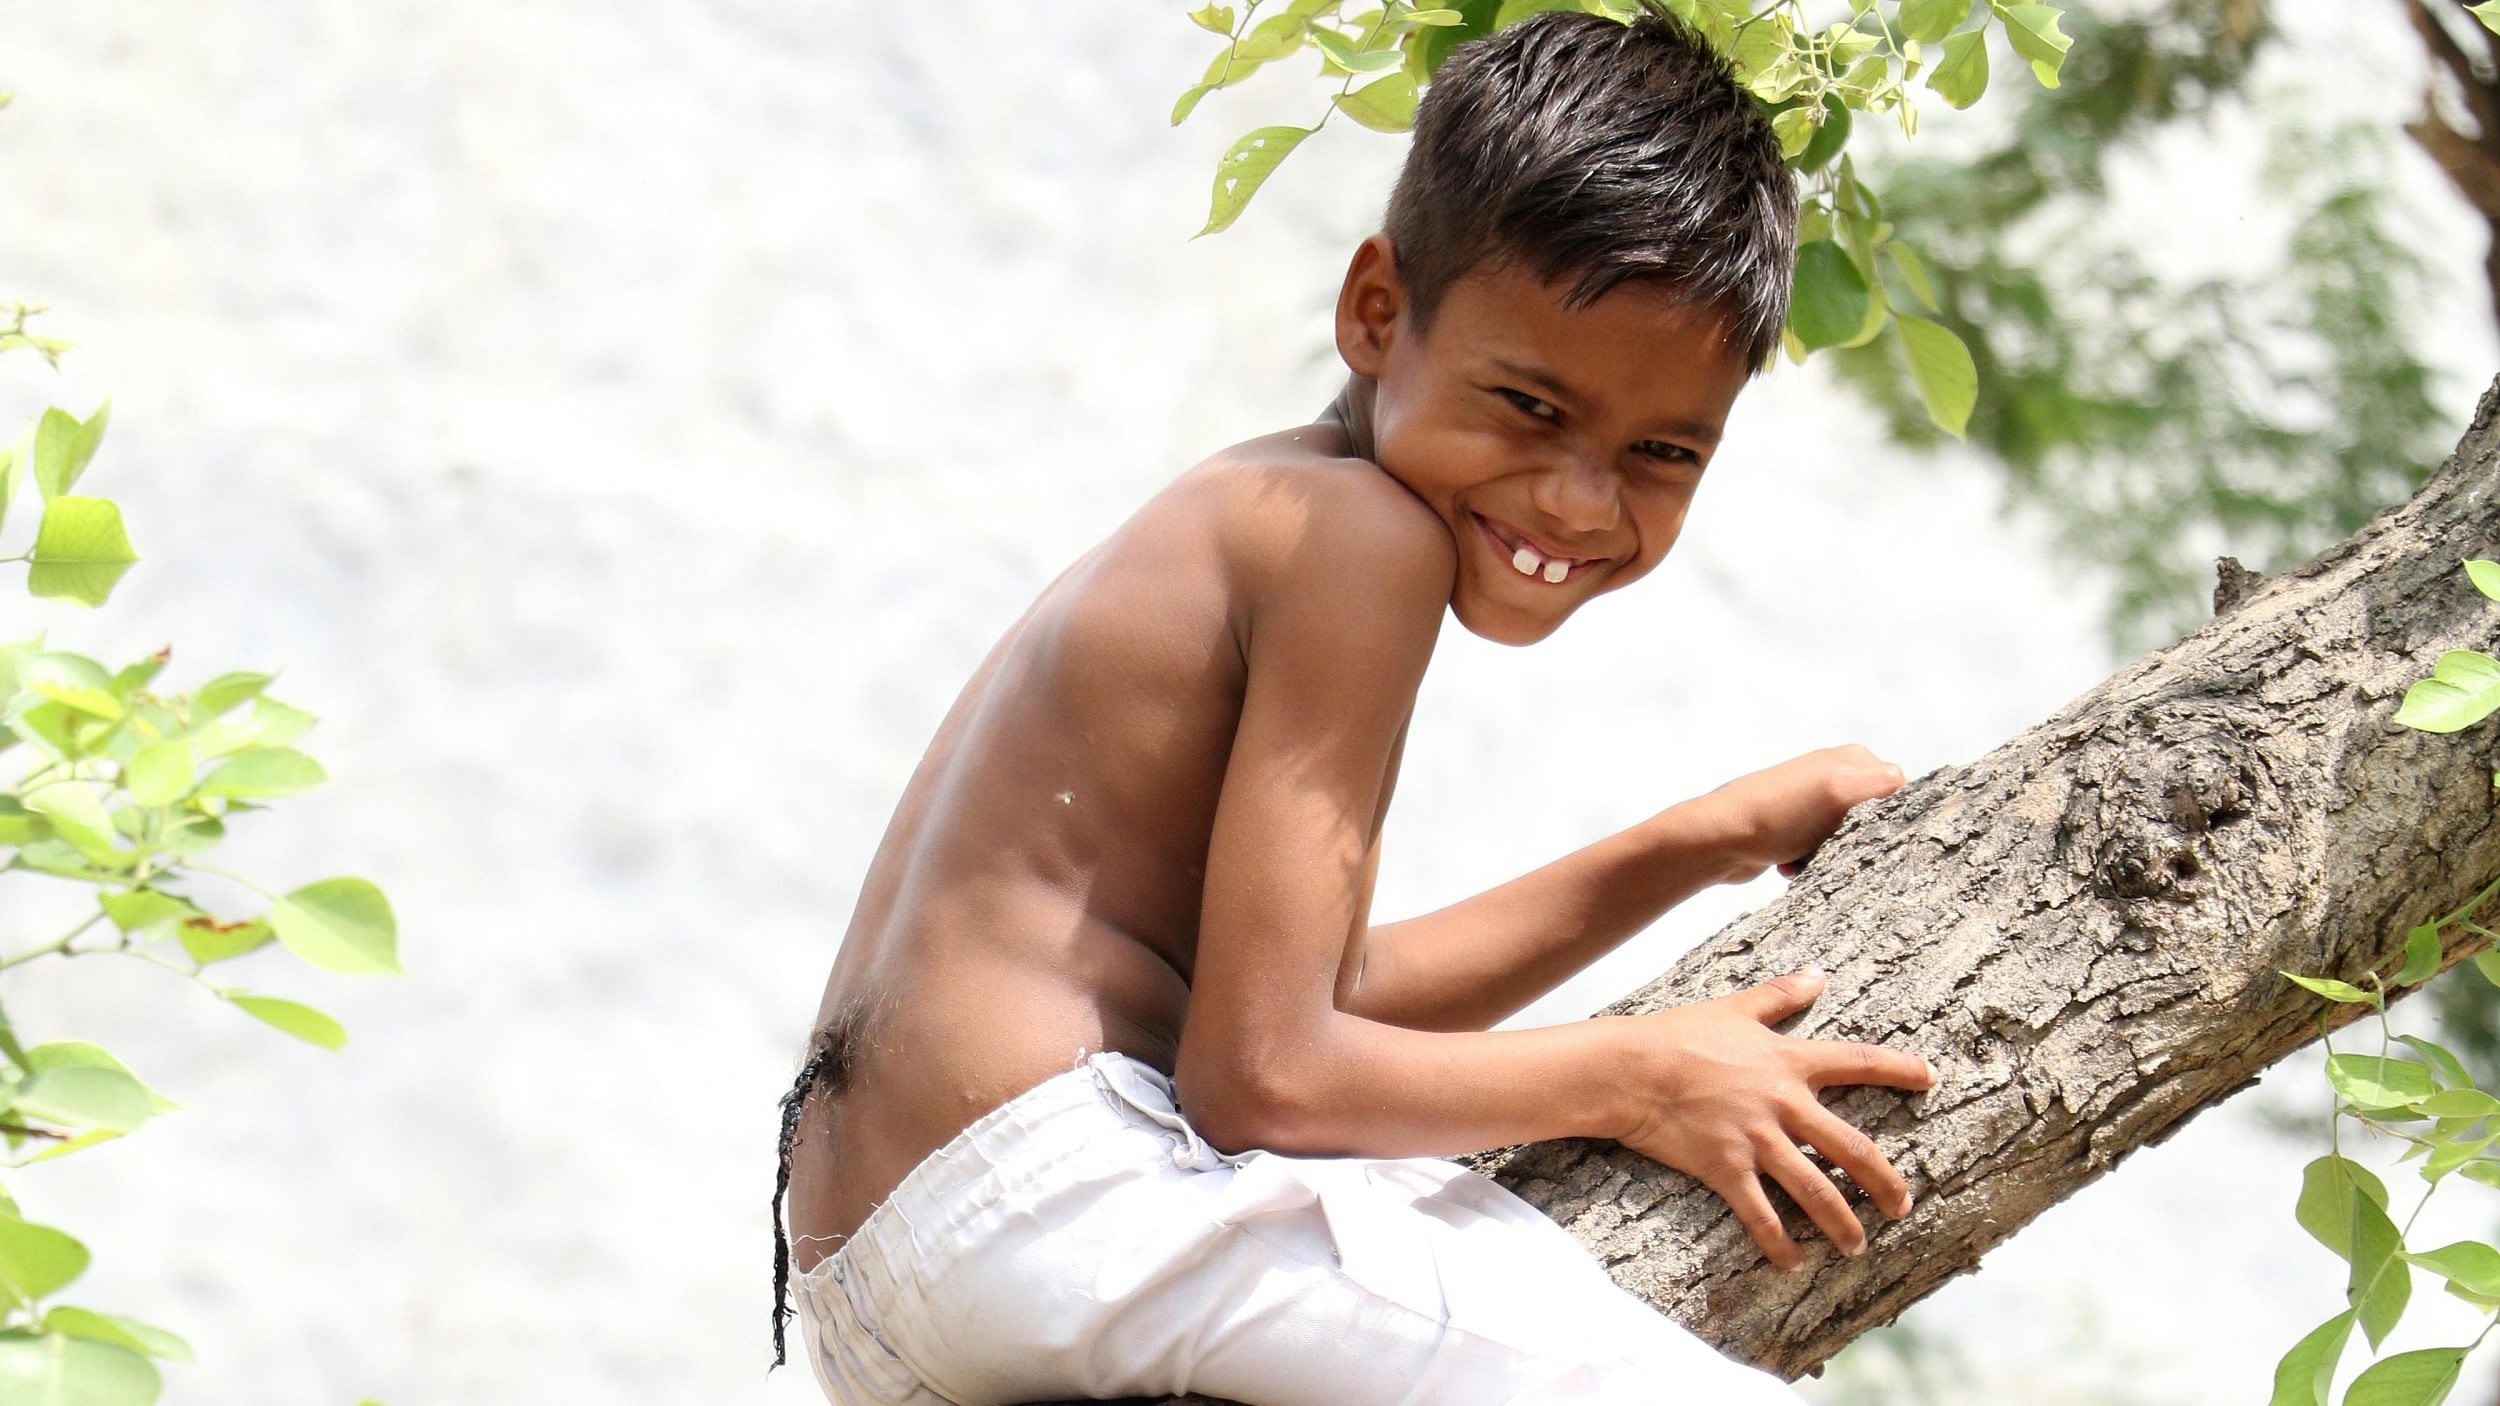 Dulha Singh, an 8-year-old boy from Amritsar, northwest India